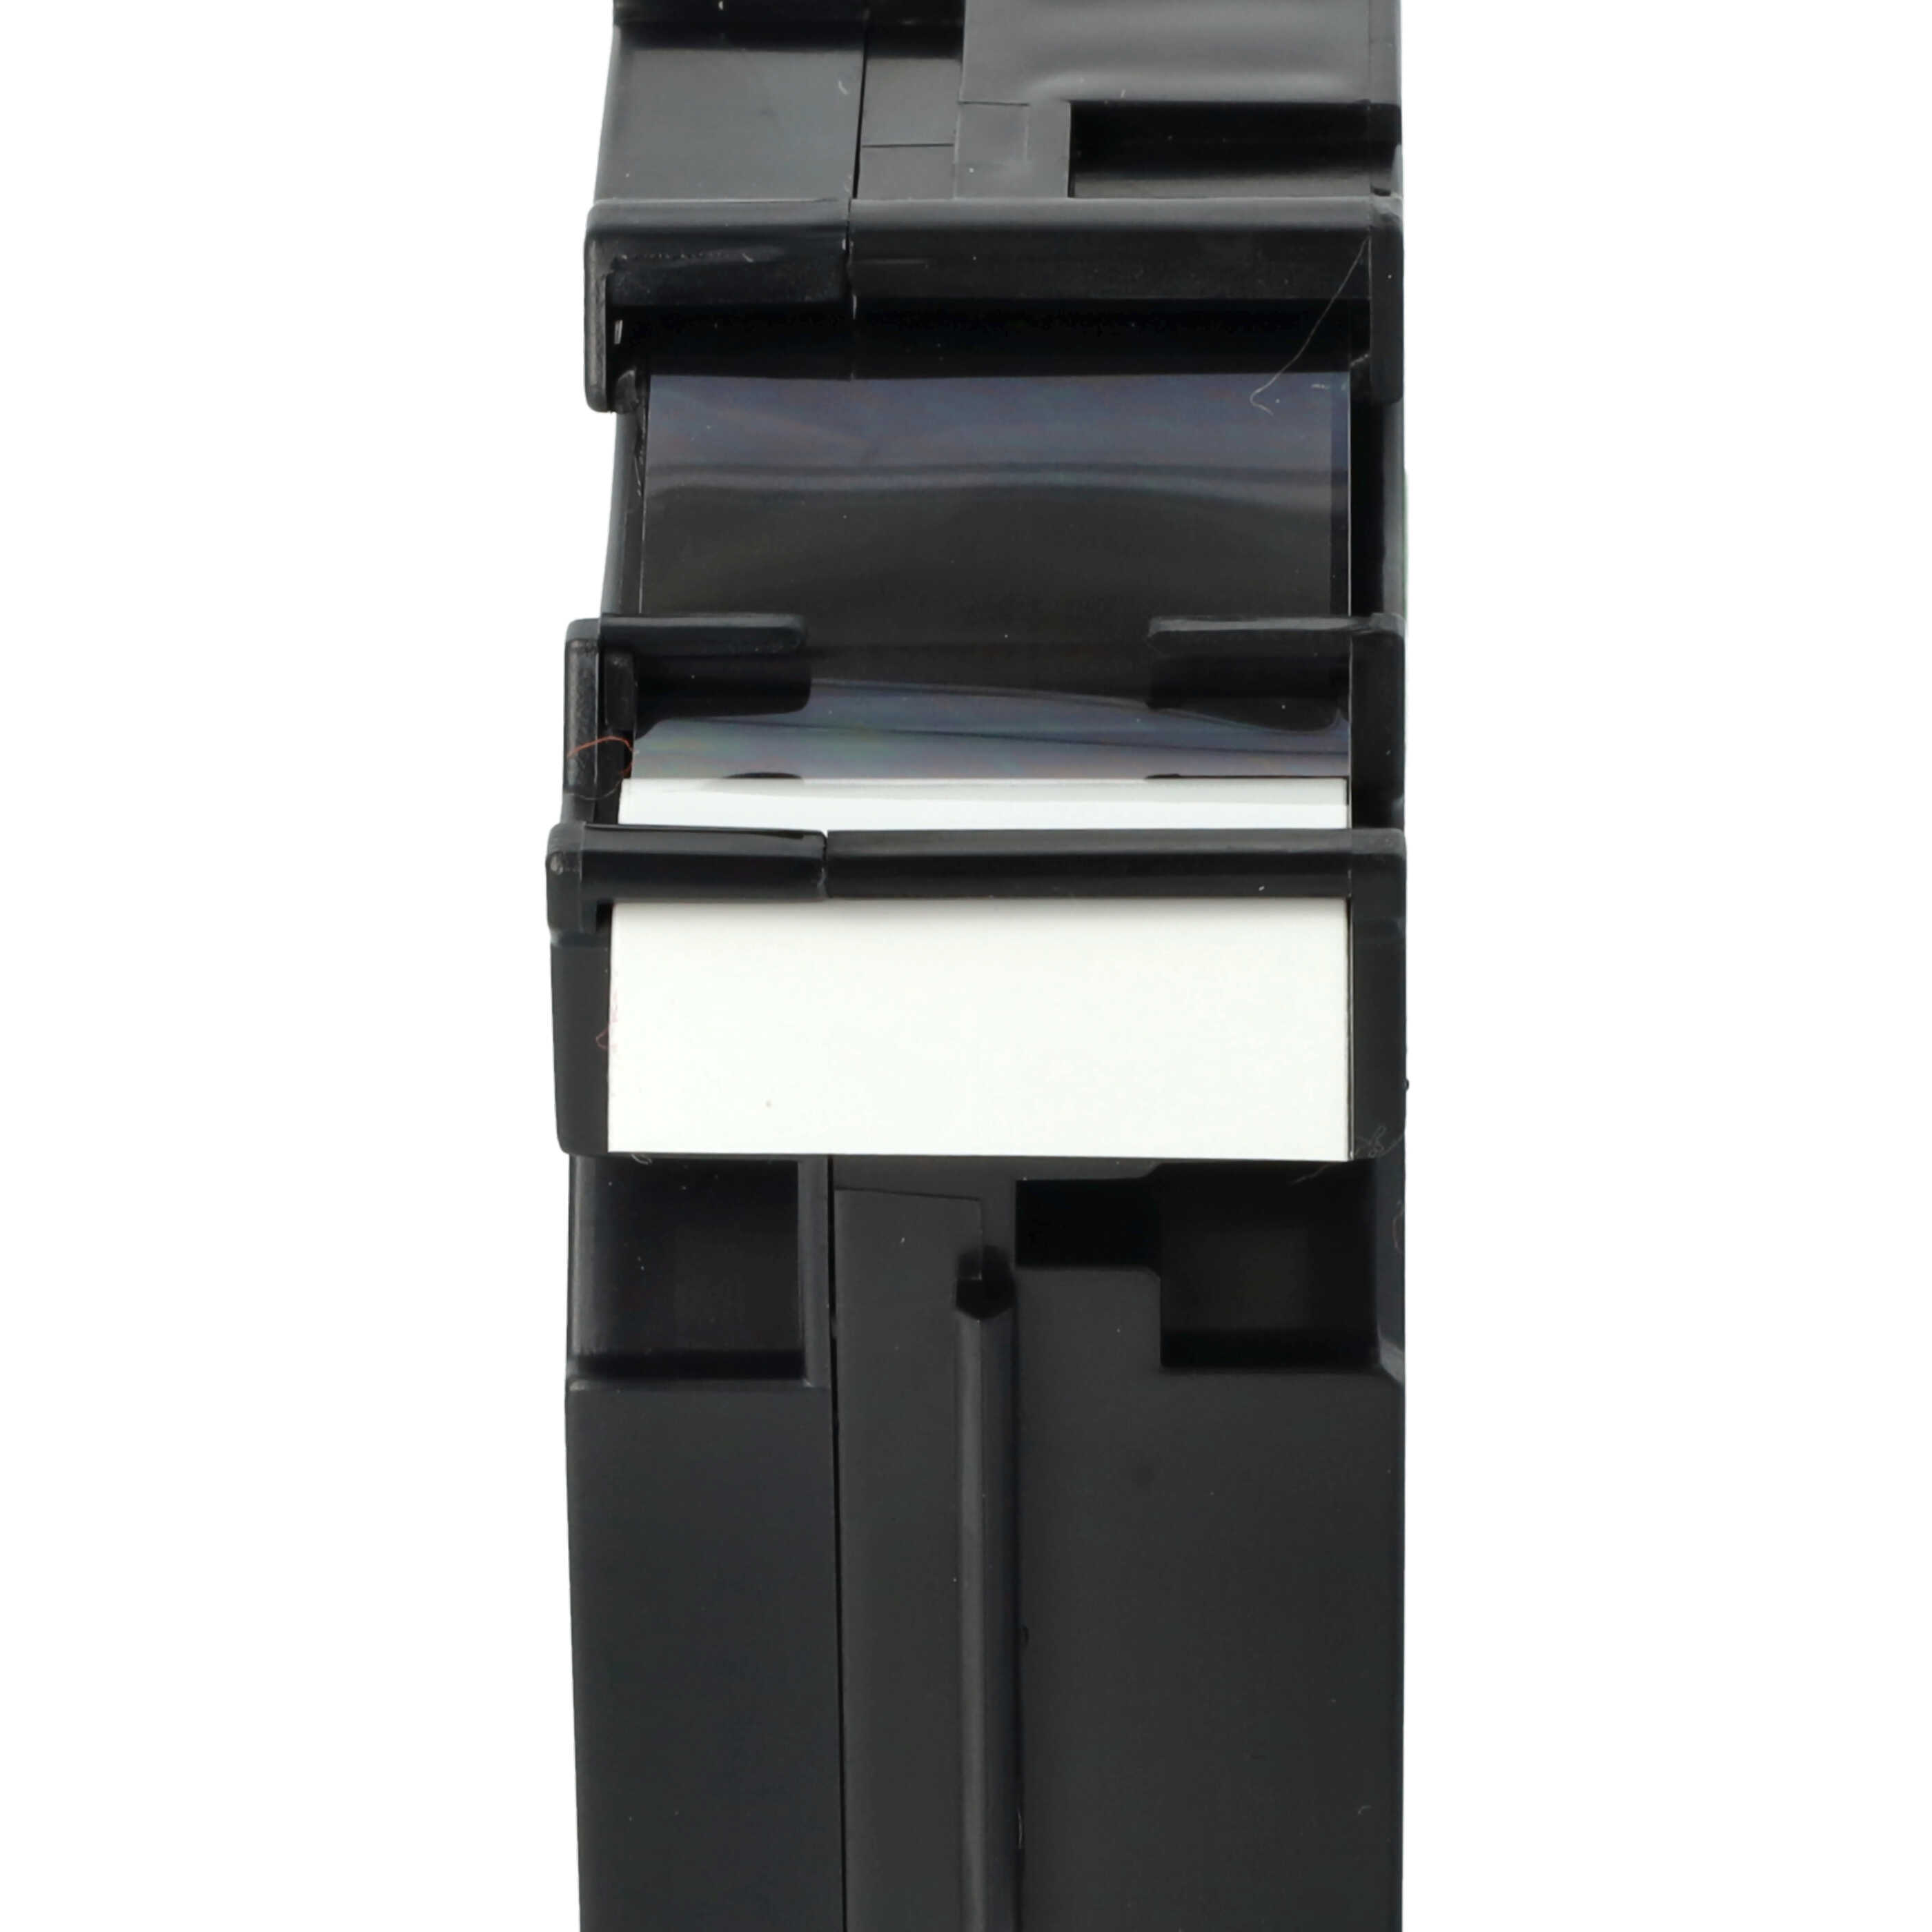 5x Casete cinta escritura reemplaza Brother TZE-251, TZ-251 Negro su Blanco